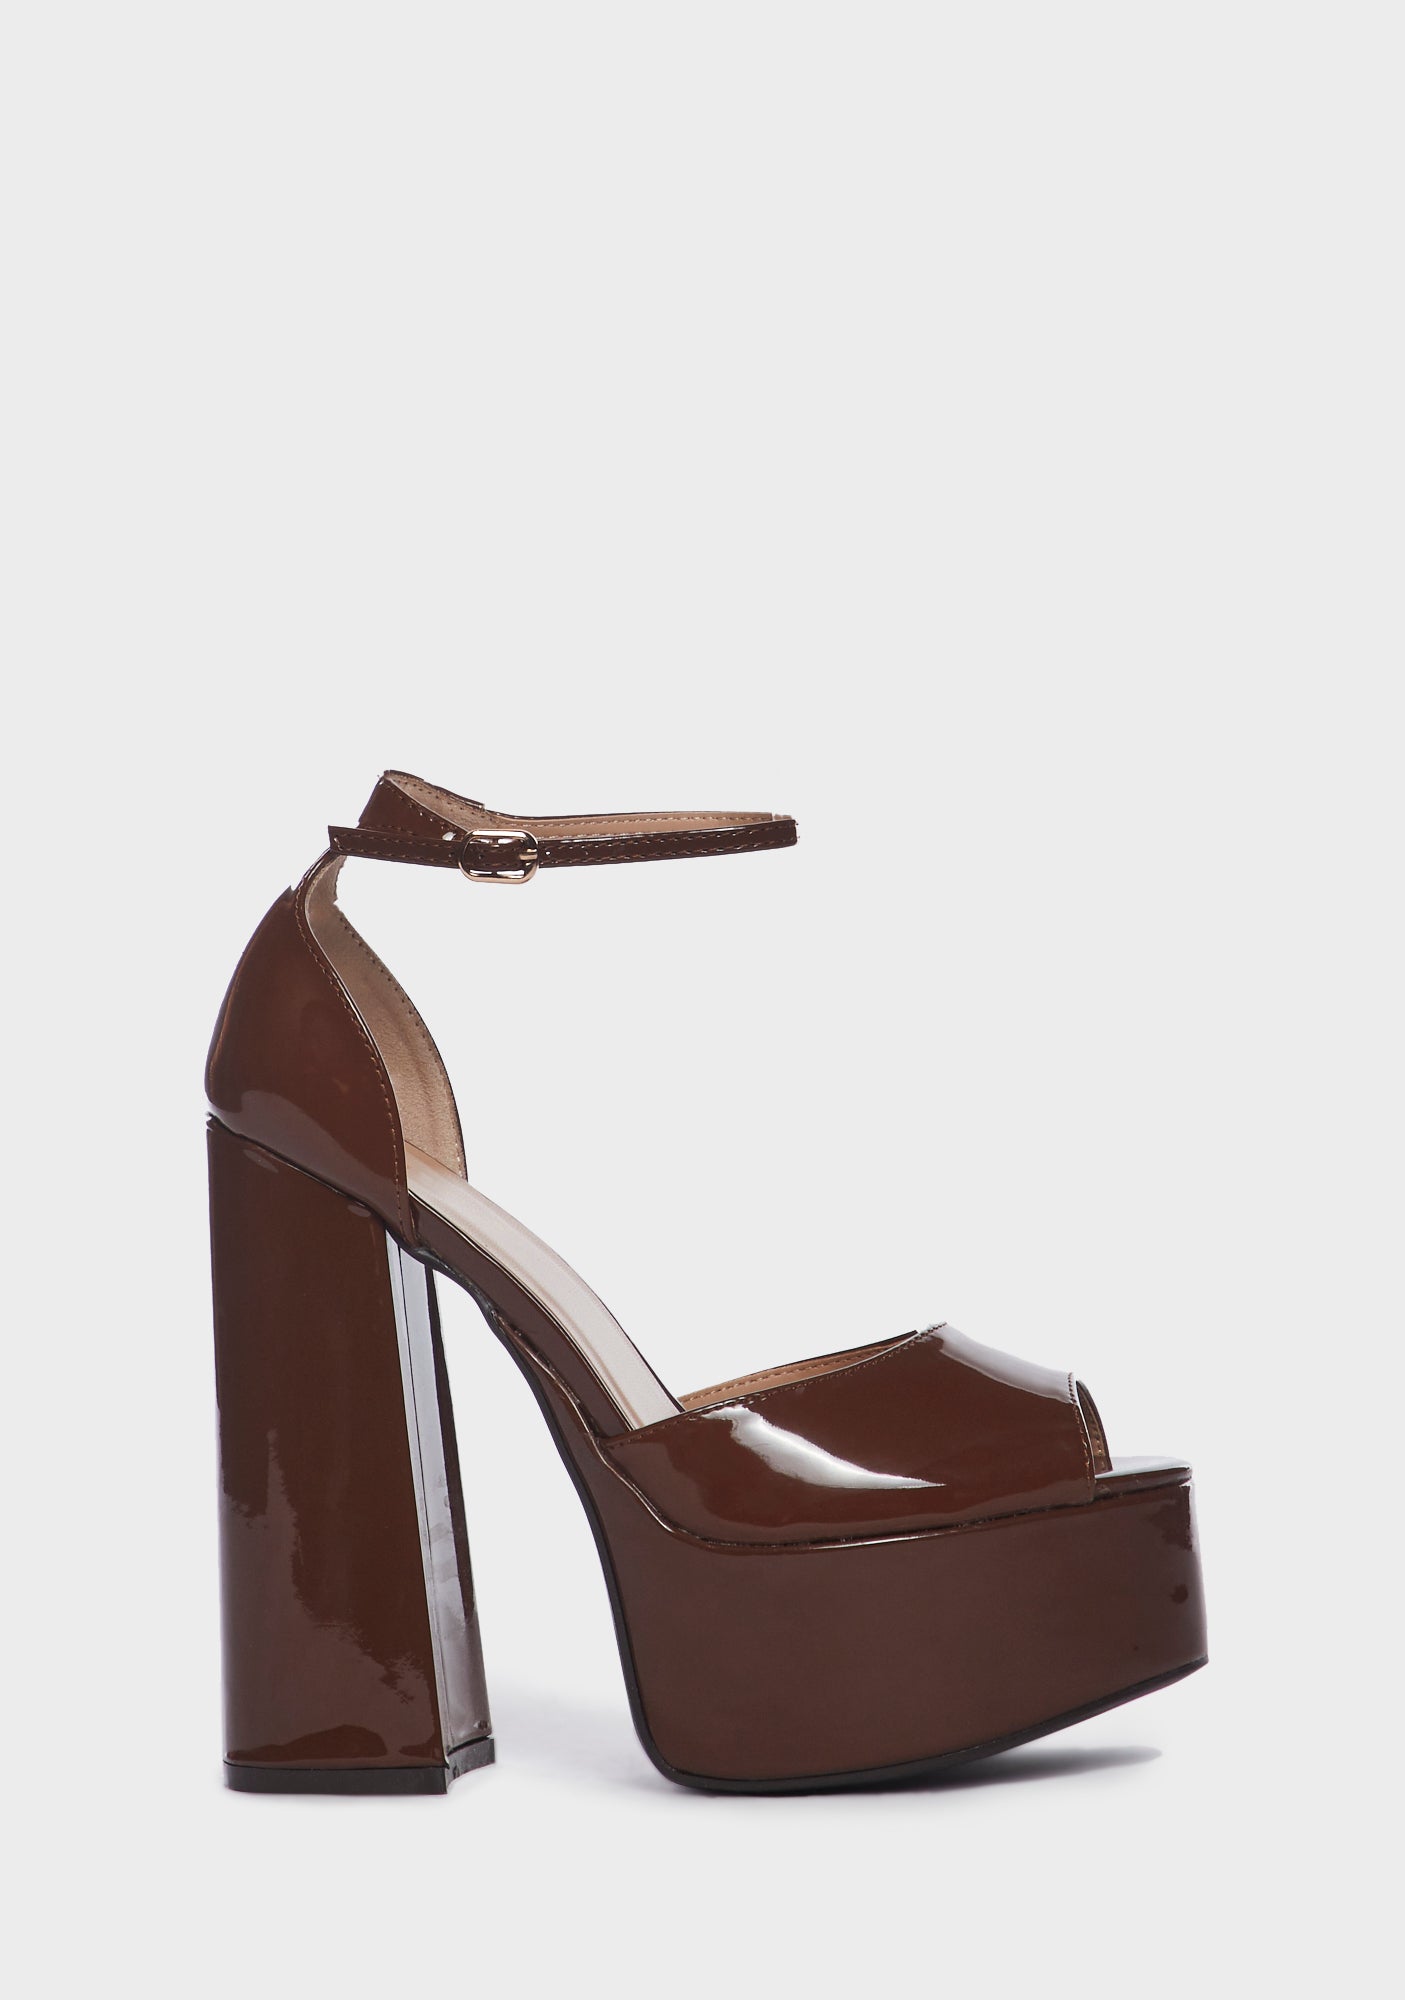 Shoe Dazzle *Brand New* Light Brown Lace Up Platform Heels Size 6 | eBay